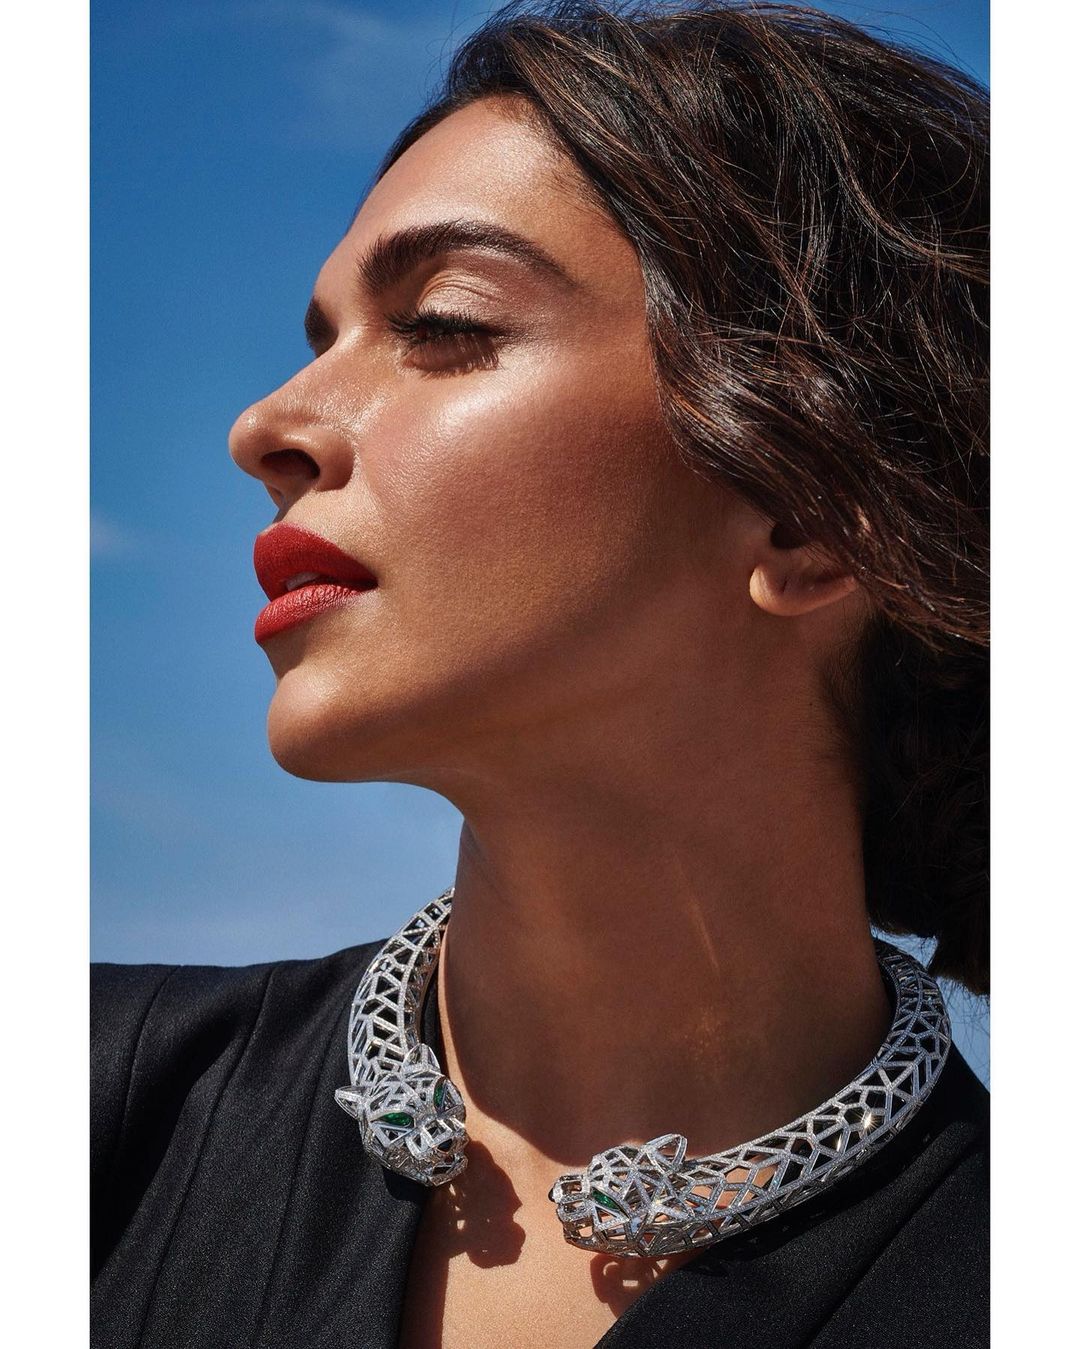 Deepika Padukone takes the seat as Cartier's newest brand